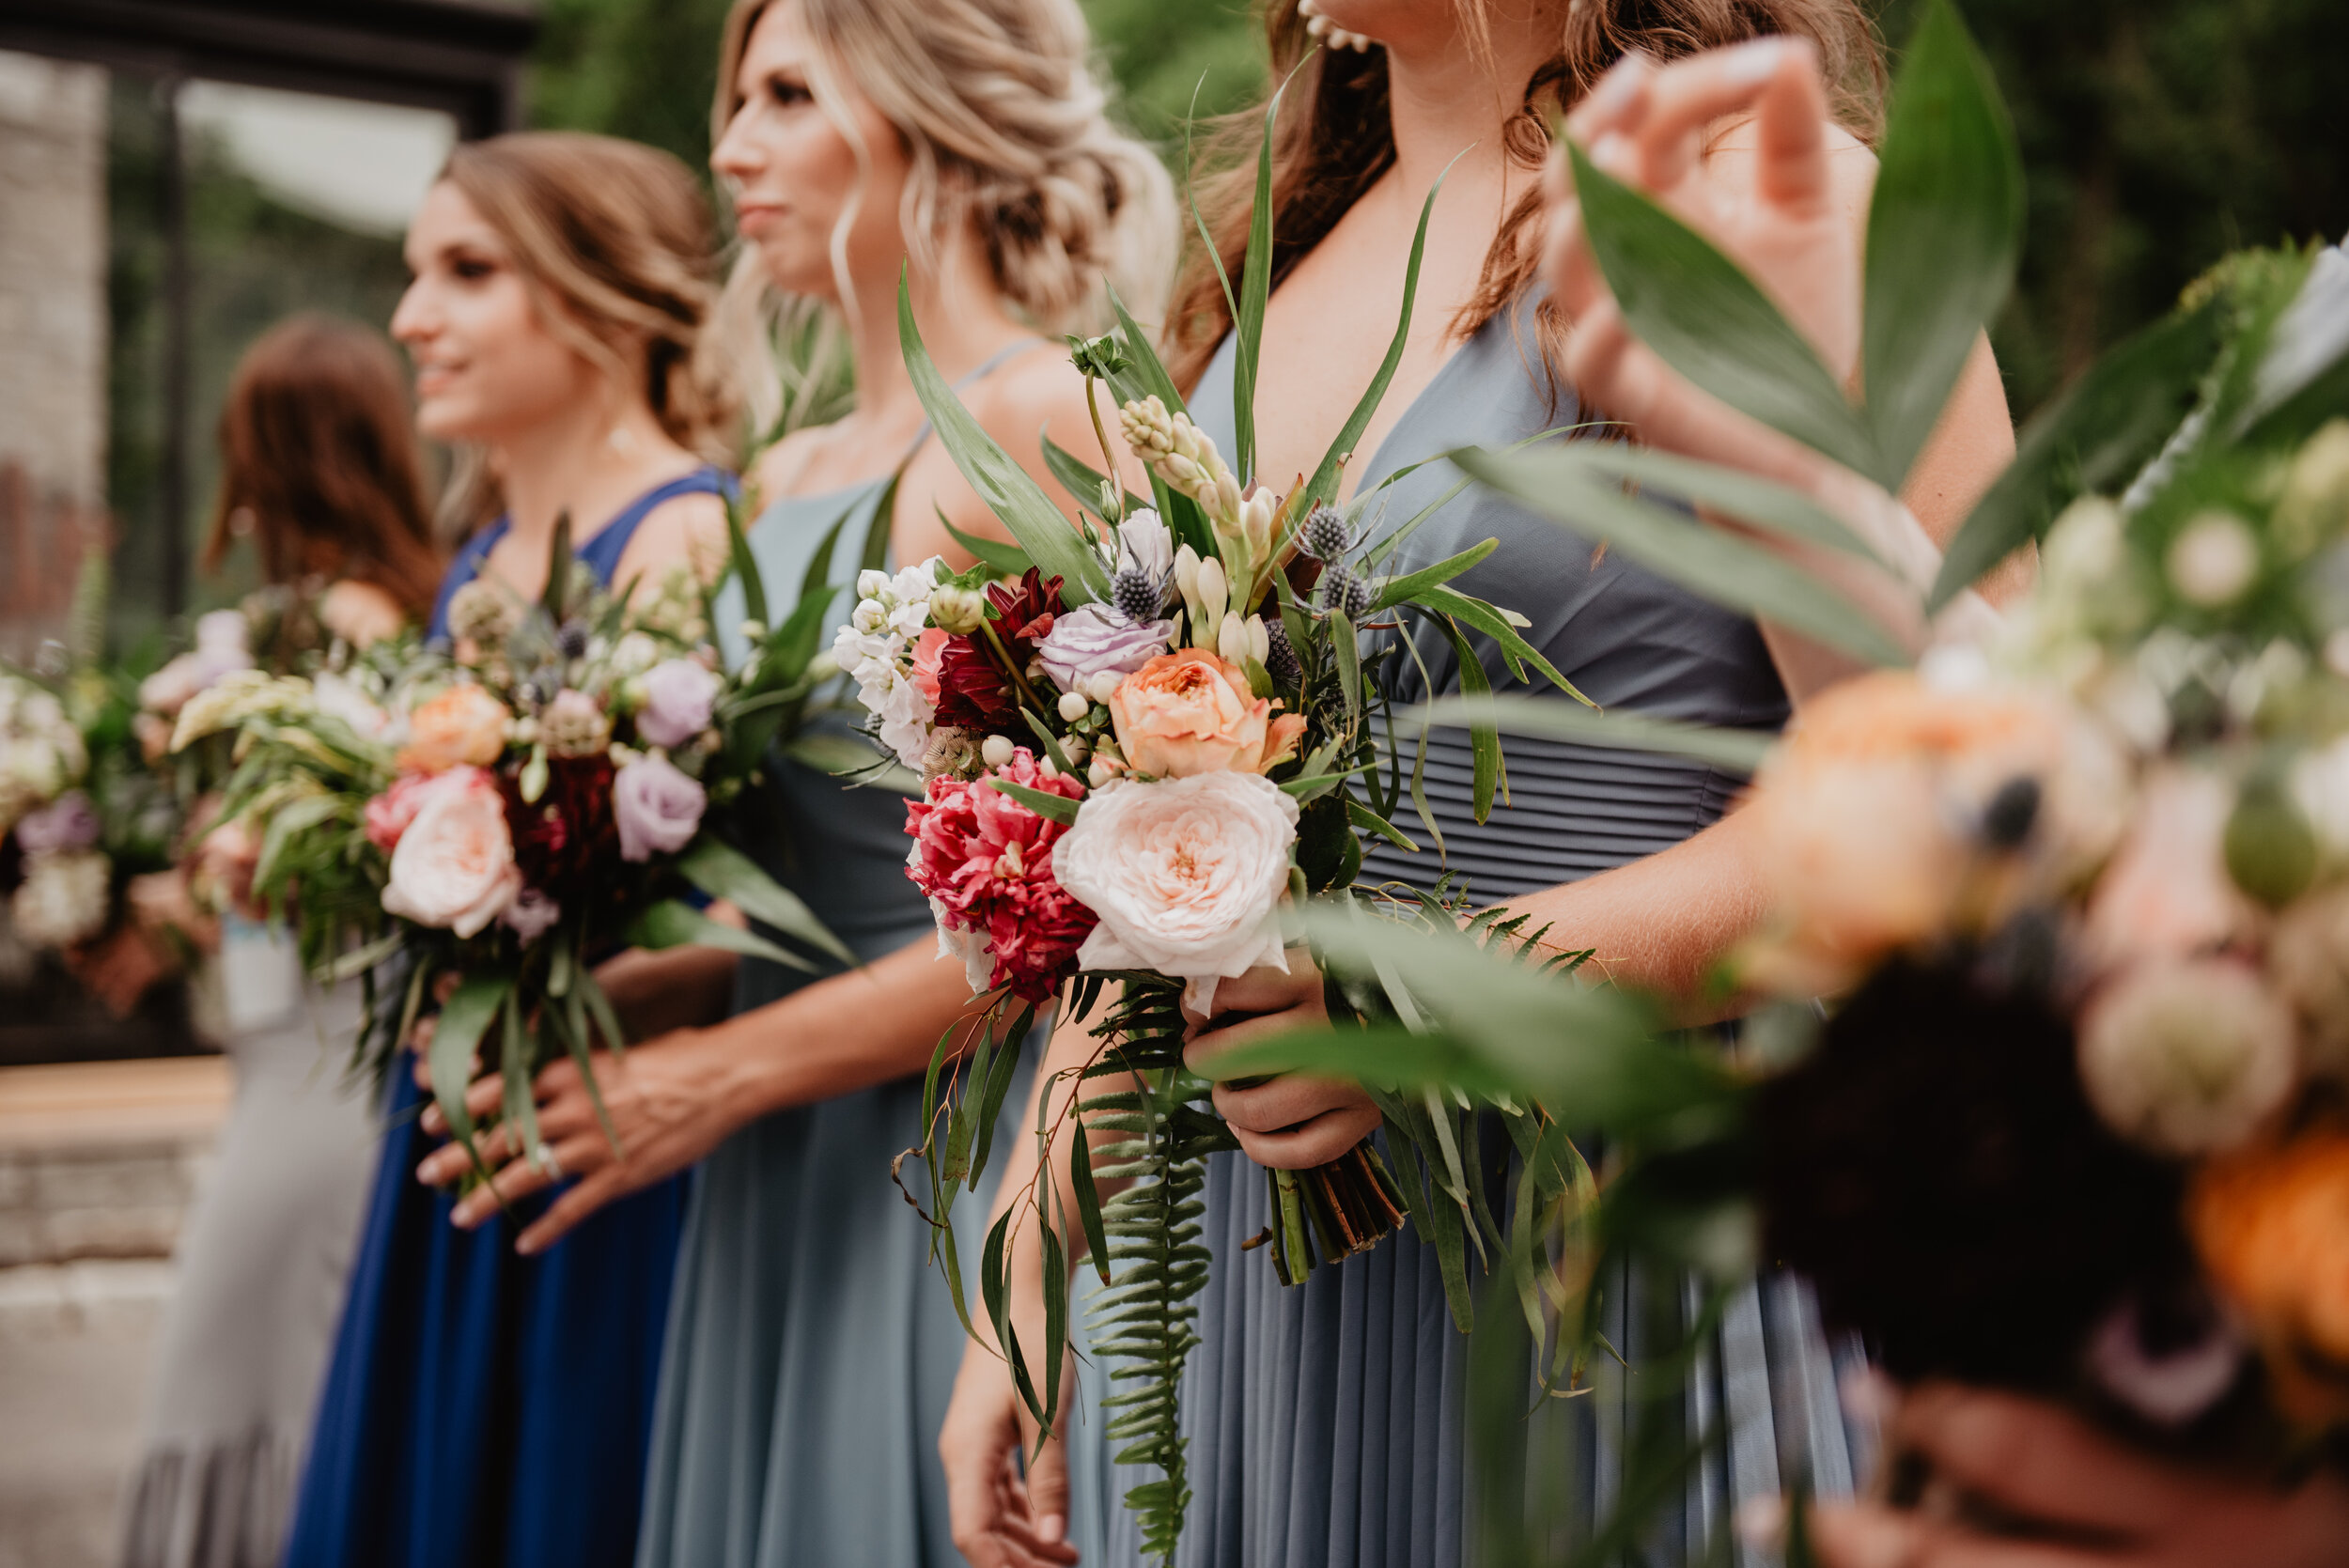 Canva - Selective Focus Photography of Women Holding Wedding Flowers.jpg